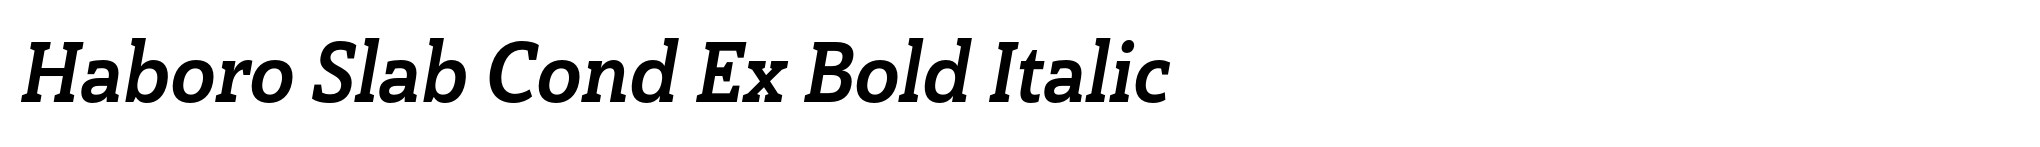 Haboro Slab Cond Ex Bold Italic image